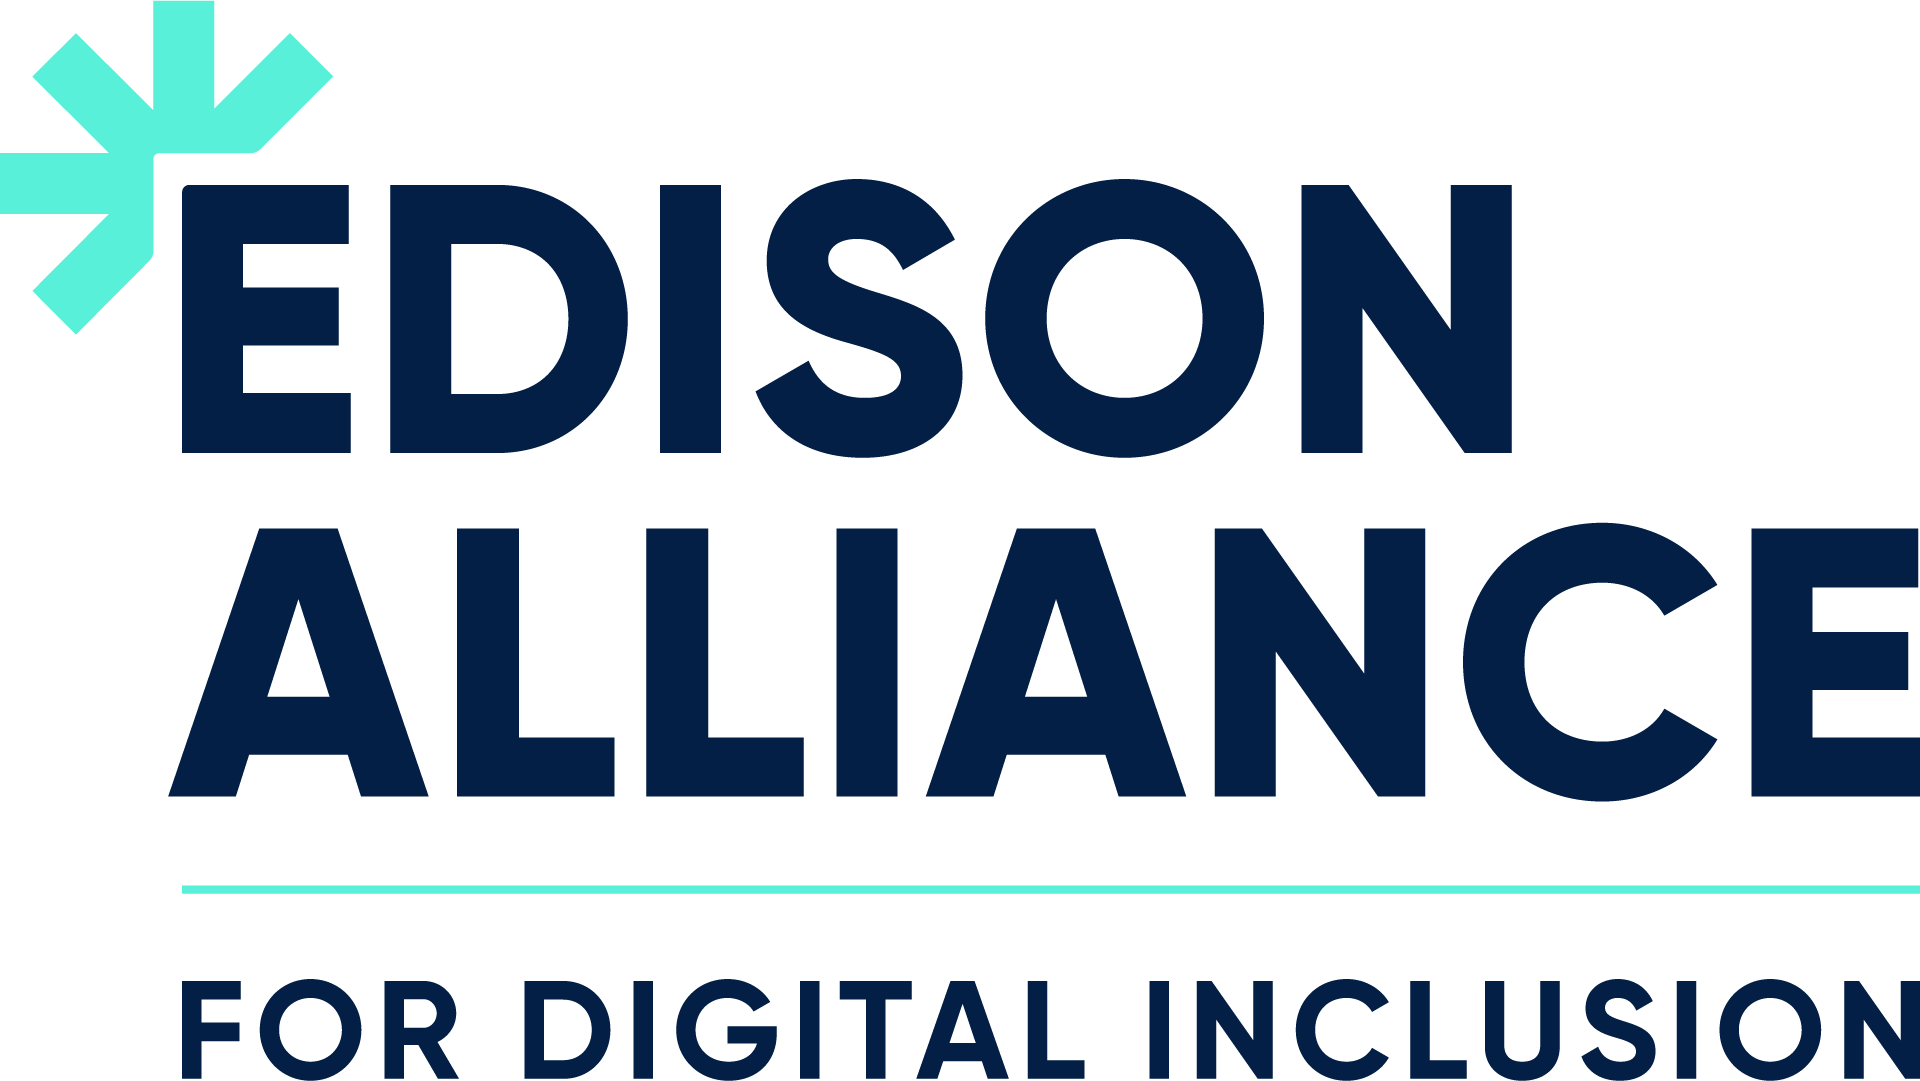 The Edison Alliance